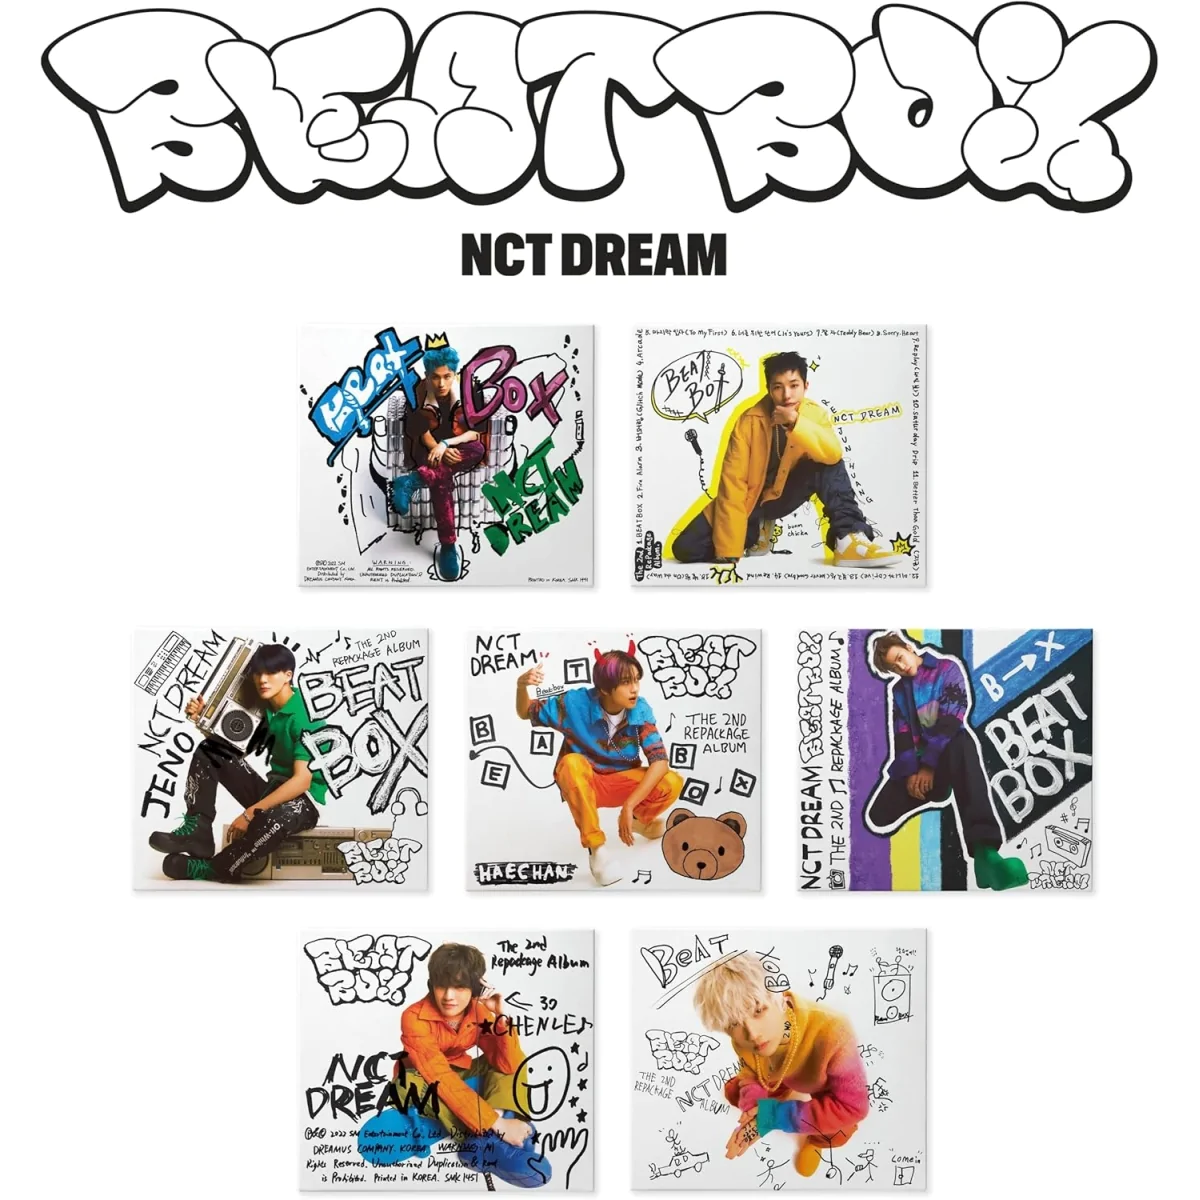 NCT DREAM - Beatbox (Digipack Version) (2nd Album Repackage) 